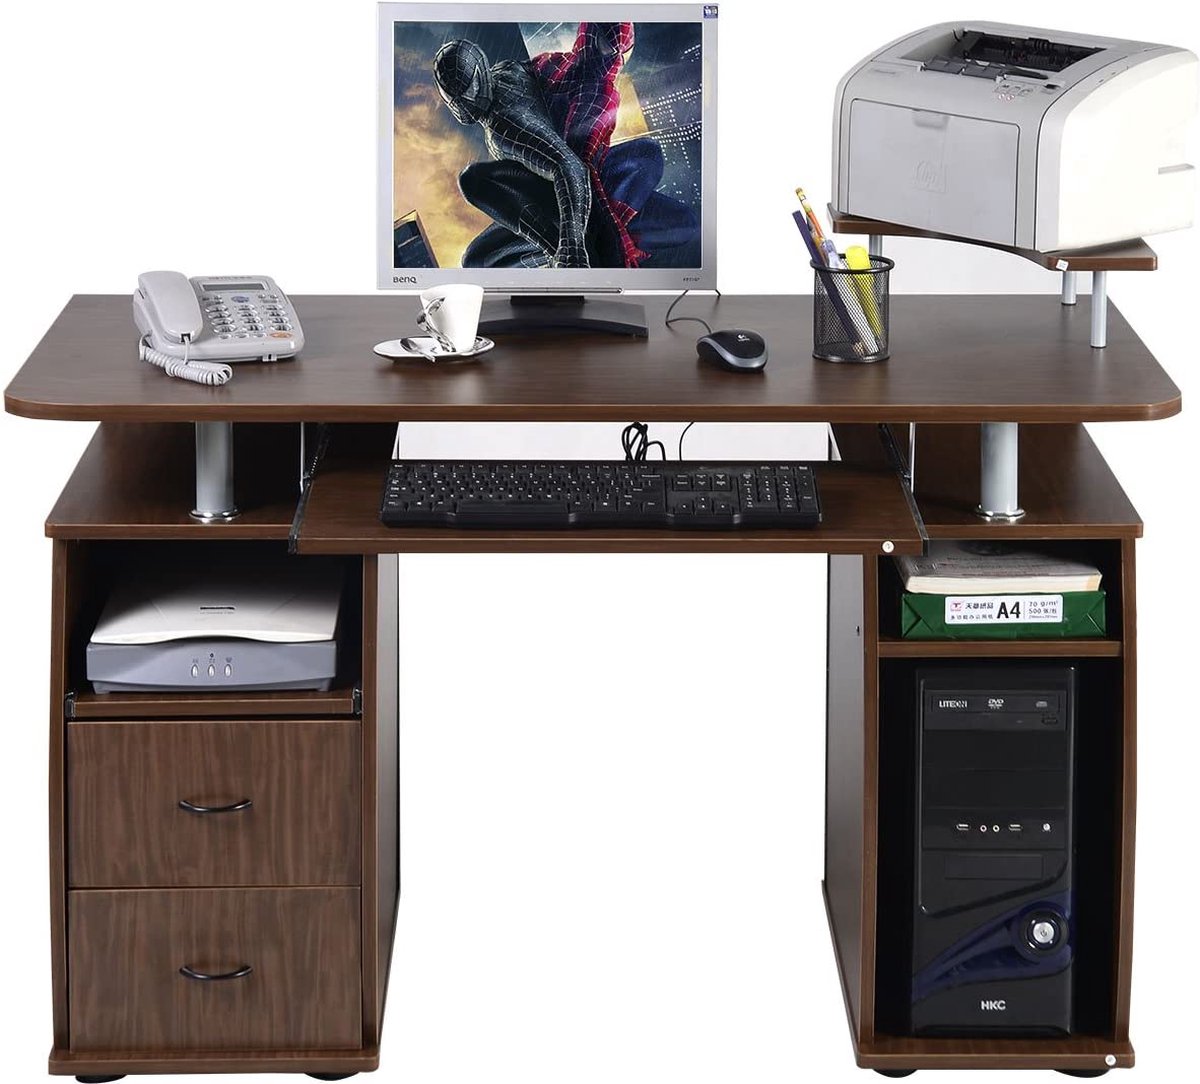 LUXGOODS computertafel- bureau, kantoortafel, werktafel, PC-tafel met toetsenbordlade, laden, printerplank, 120 x 55 x 85cm (Bruin)